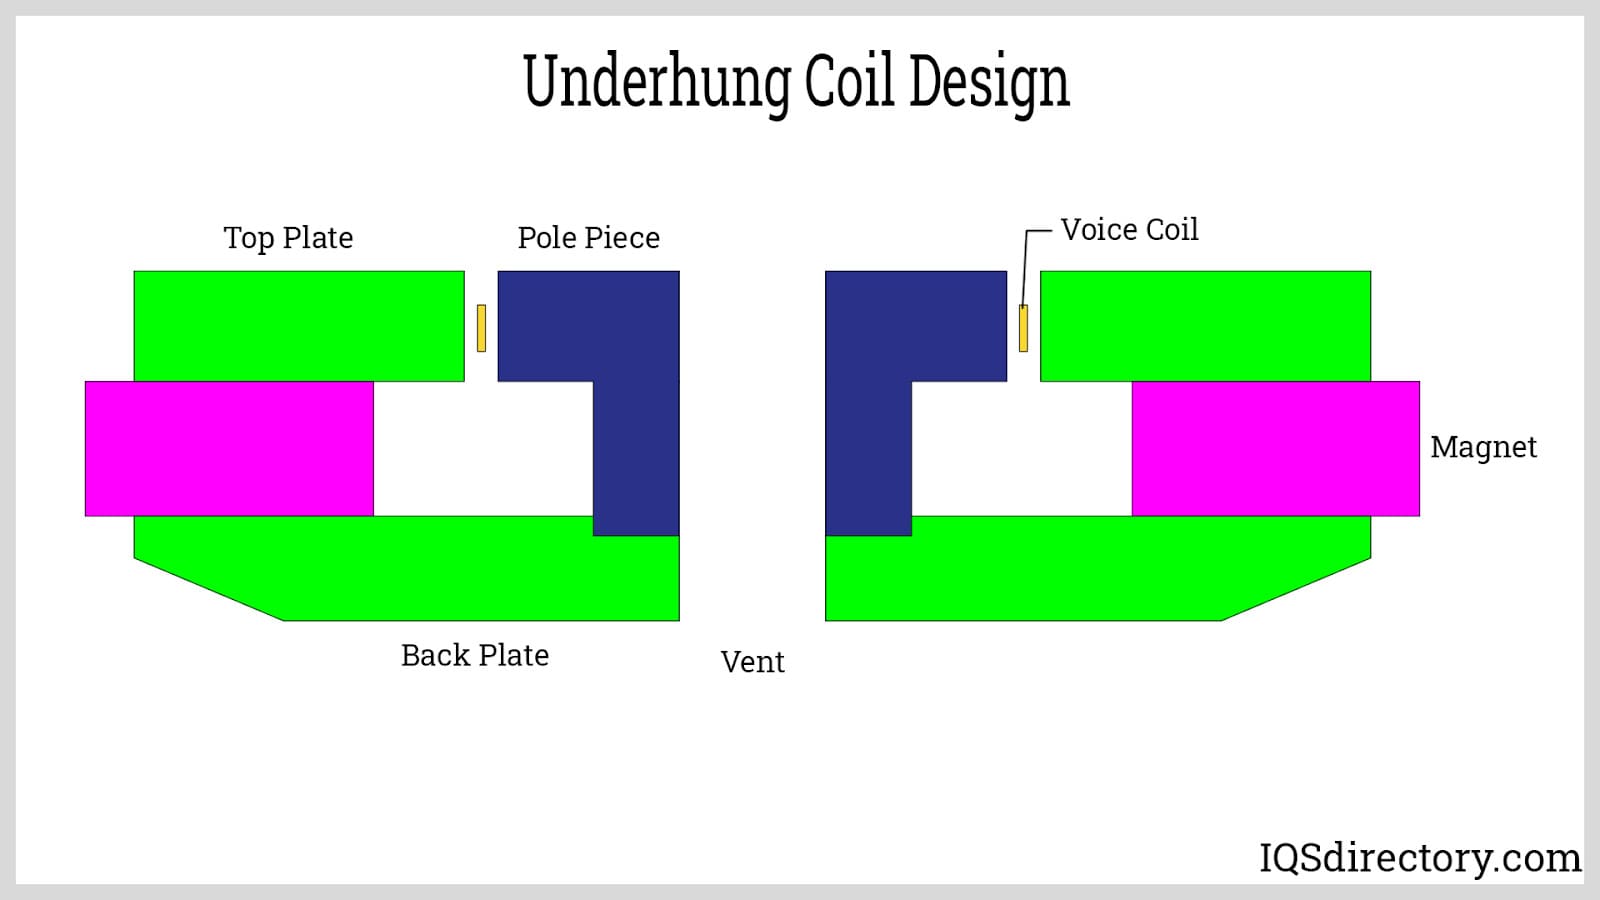 Under-hung Coil Design